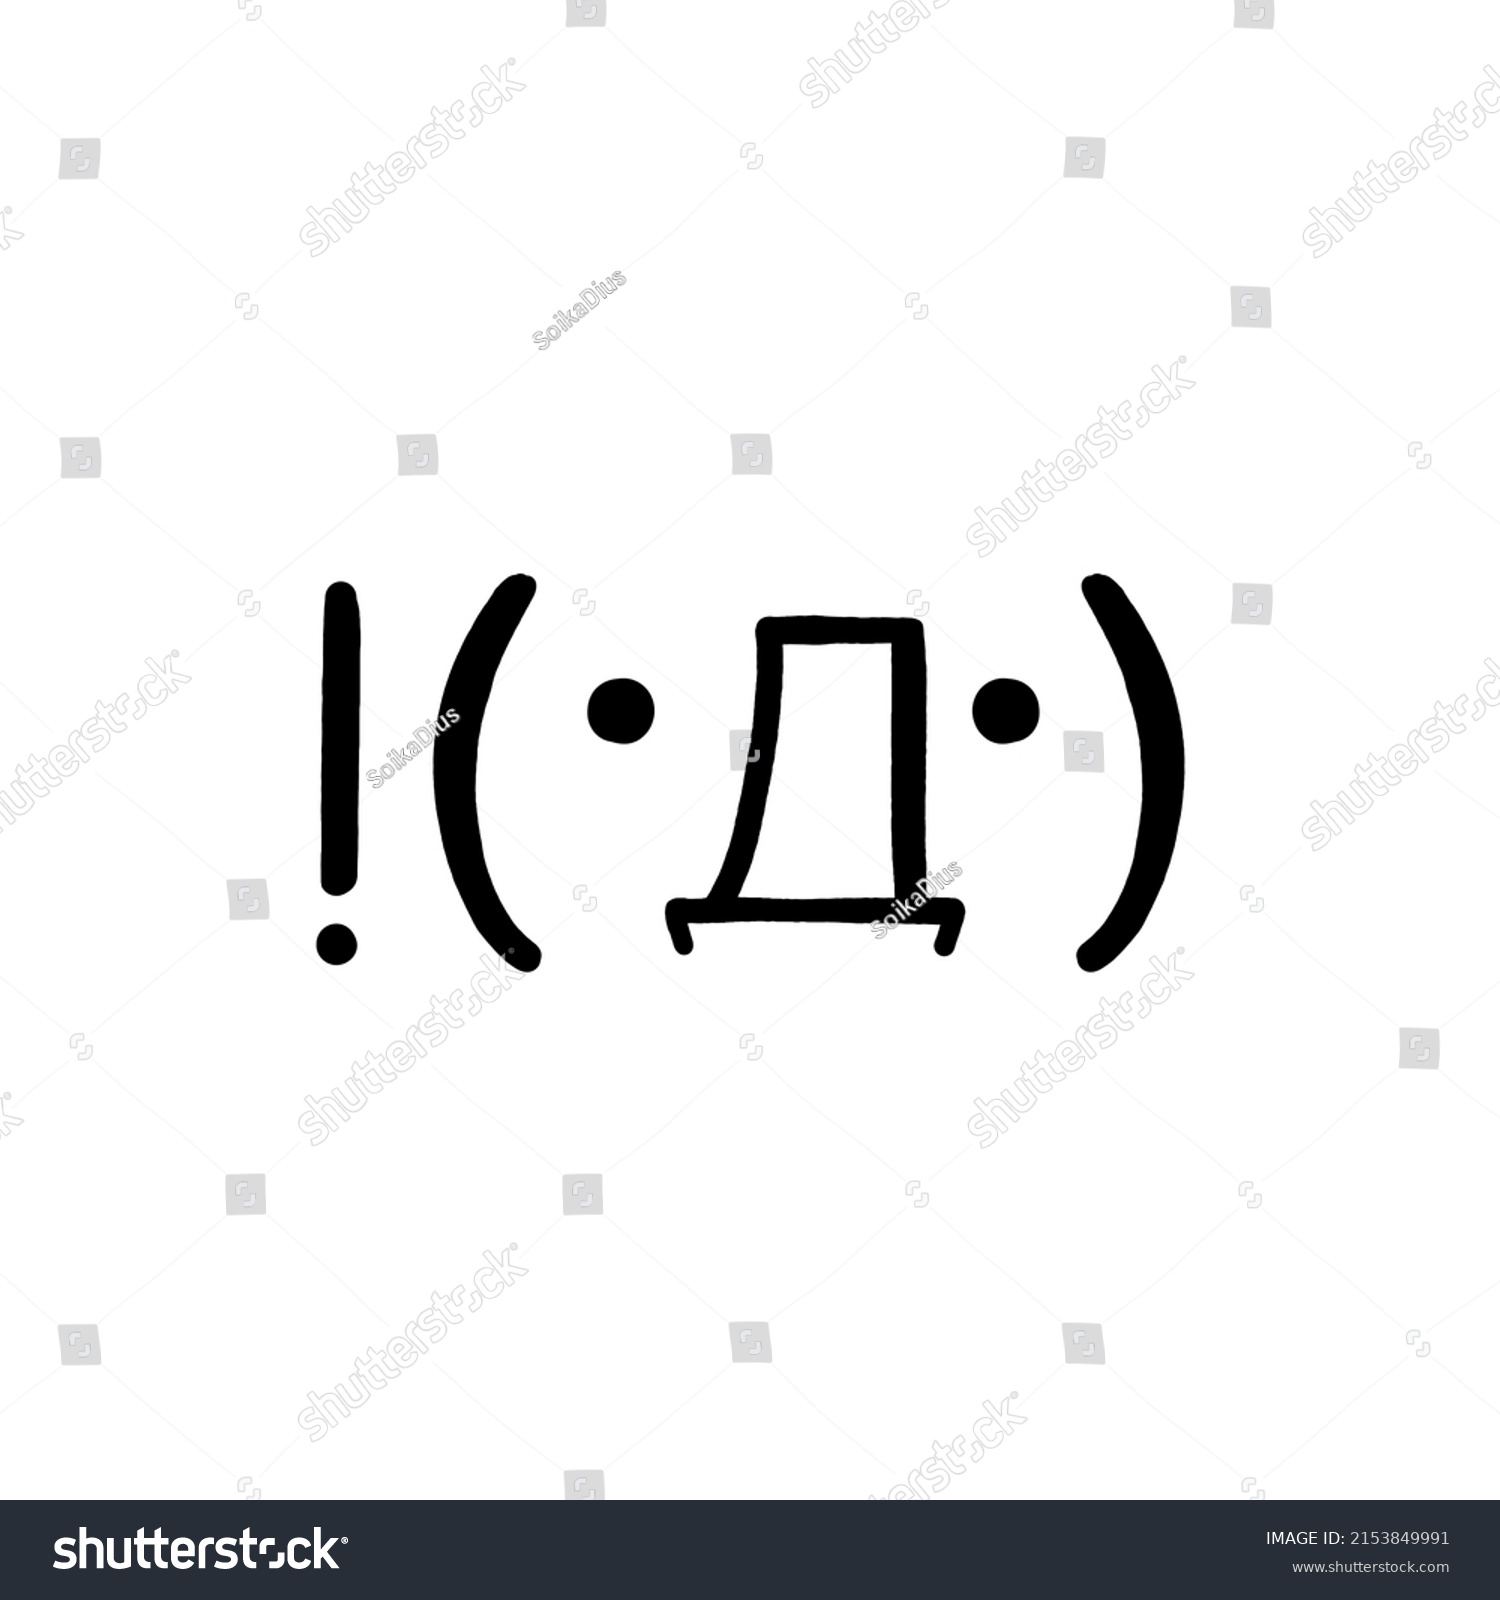 Kaomoji Japanese Text Emoji Cute Faces Stock Illustration 2153849991 ...